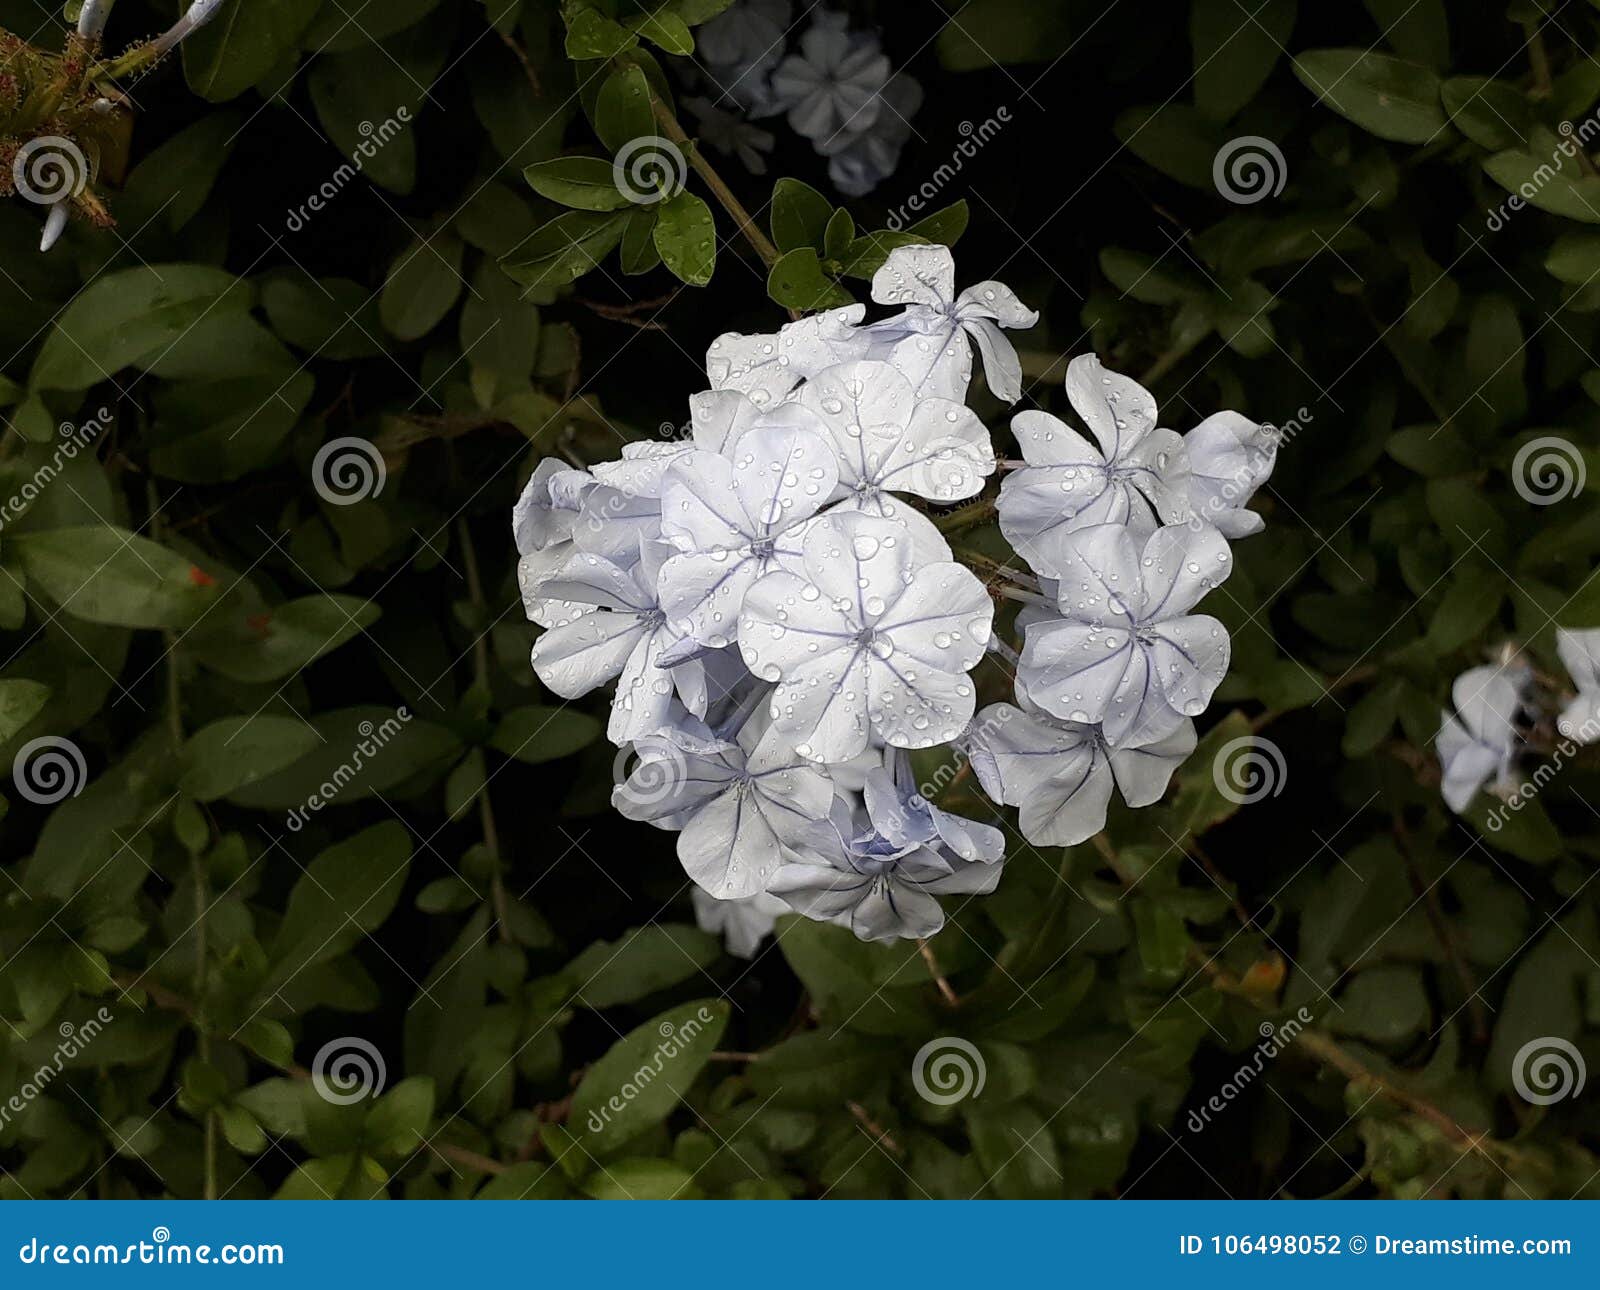 flor color blanco marfil / white flower